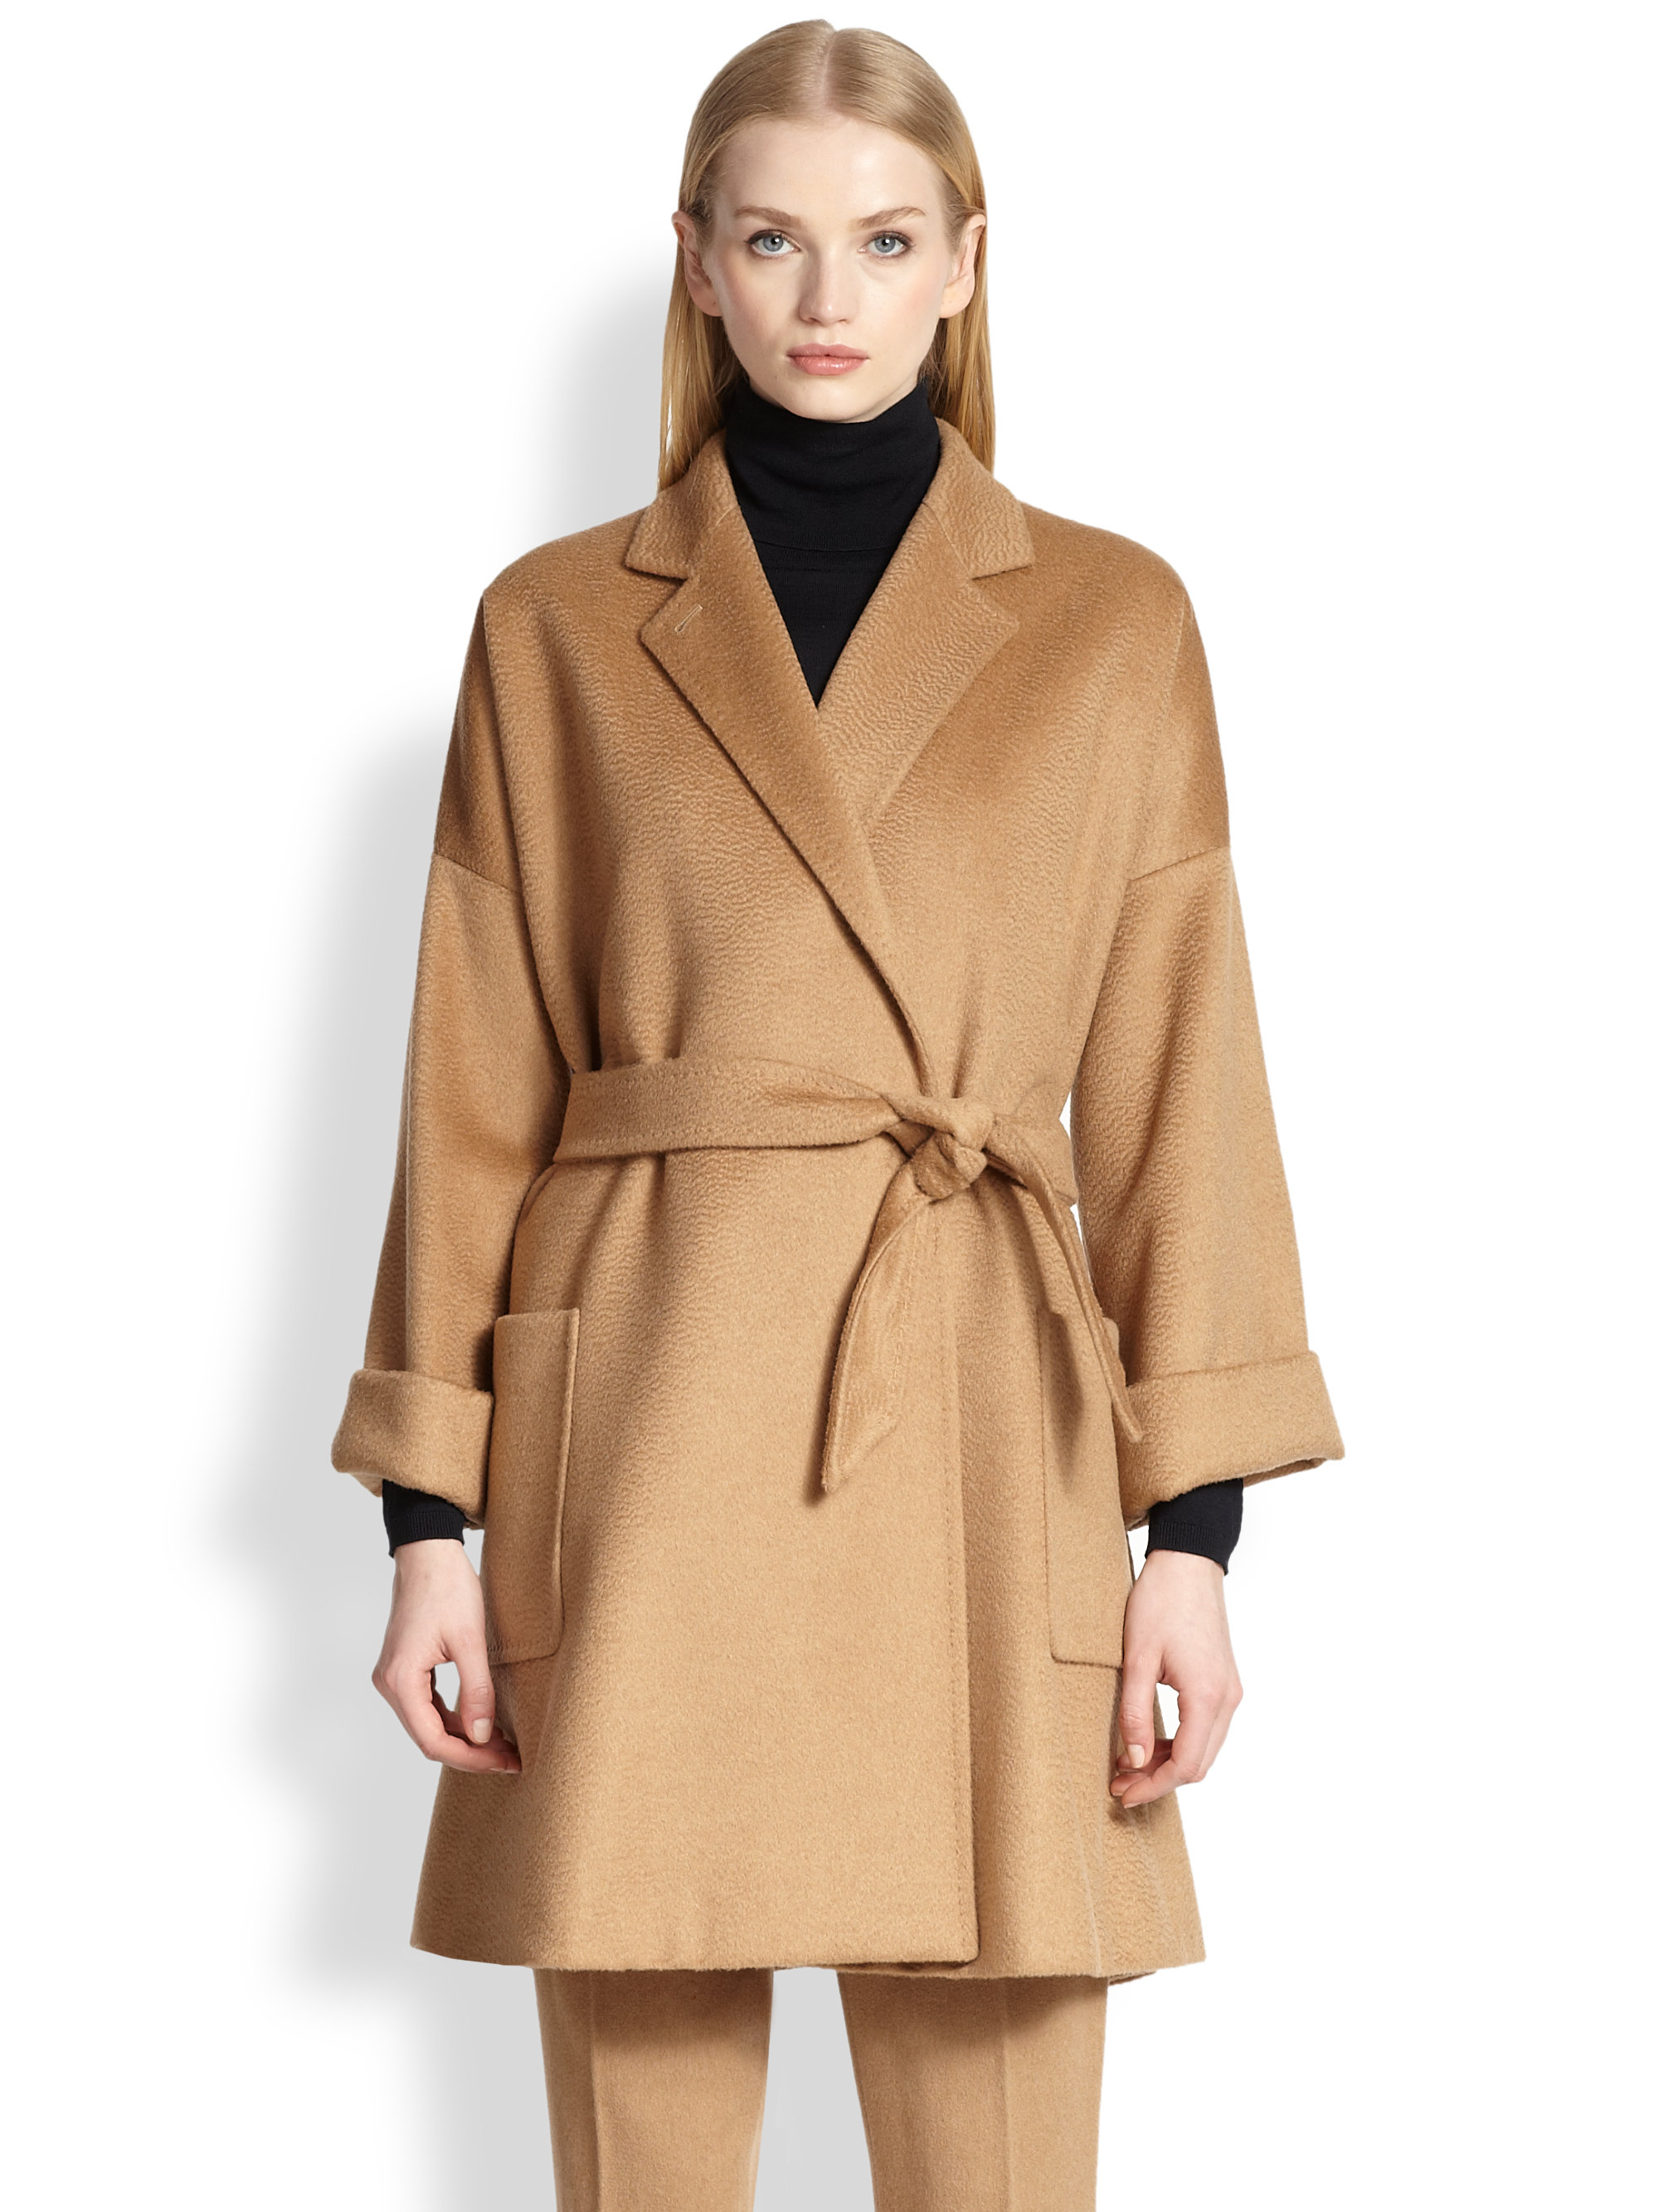 Lyst - Max Mara Pelago Camelhair Wrap Coat in Brown